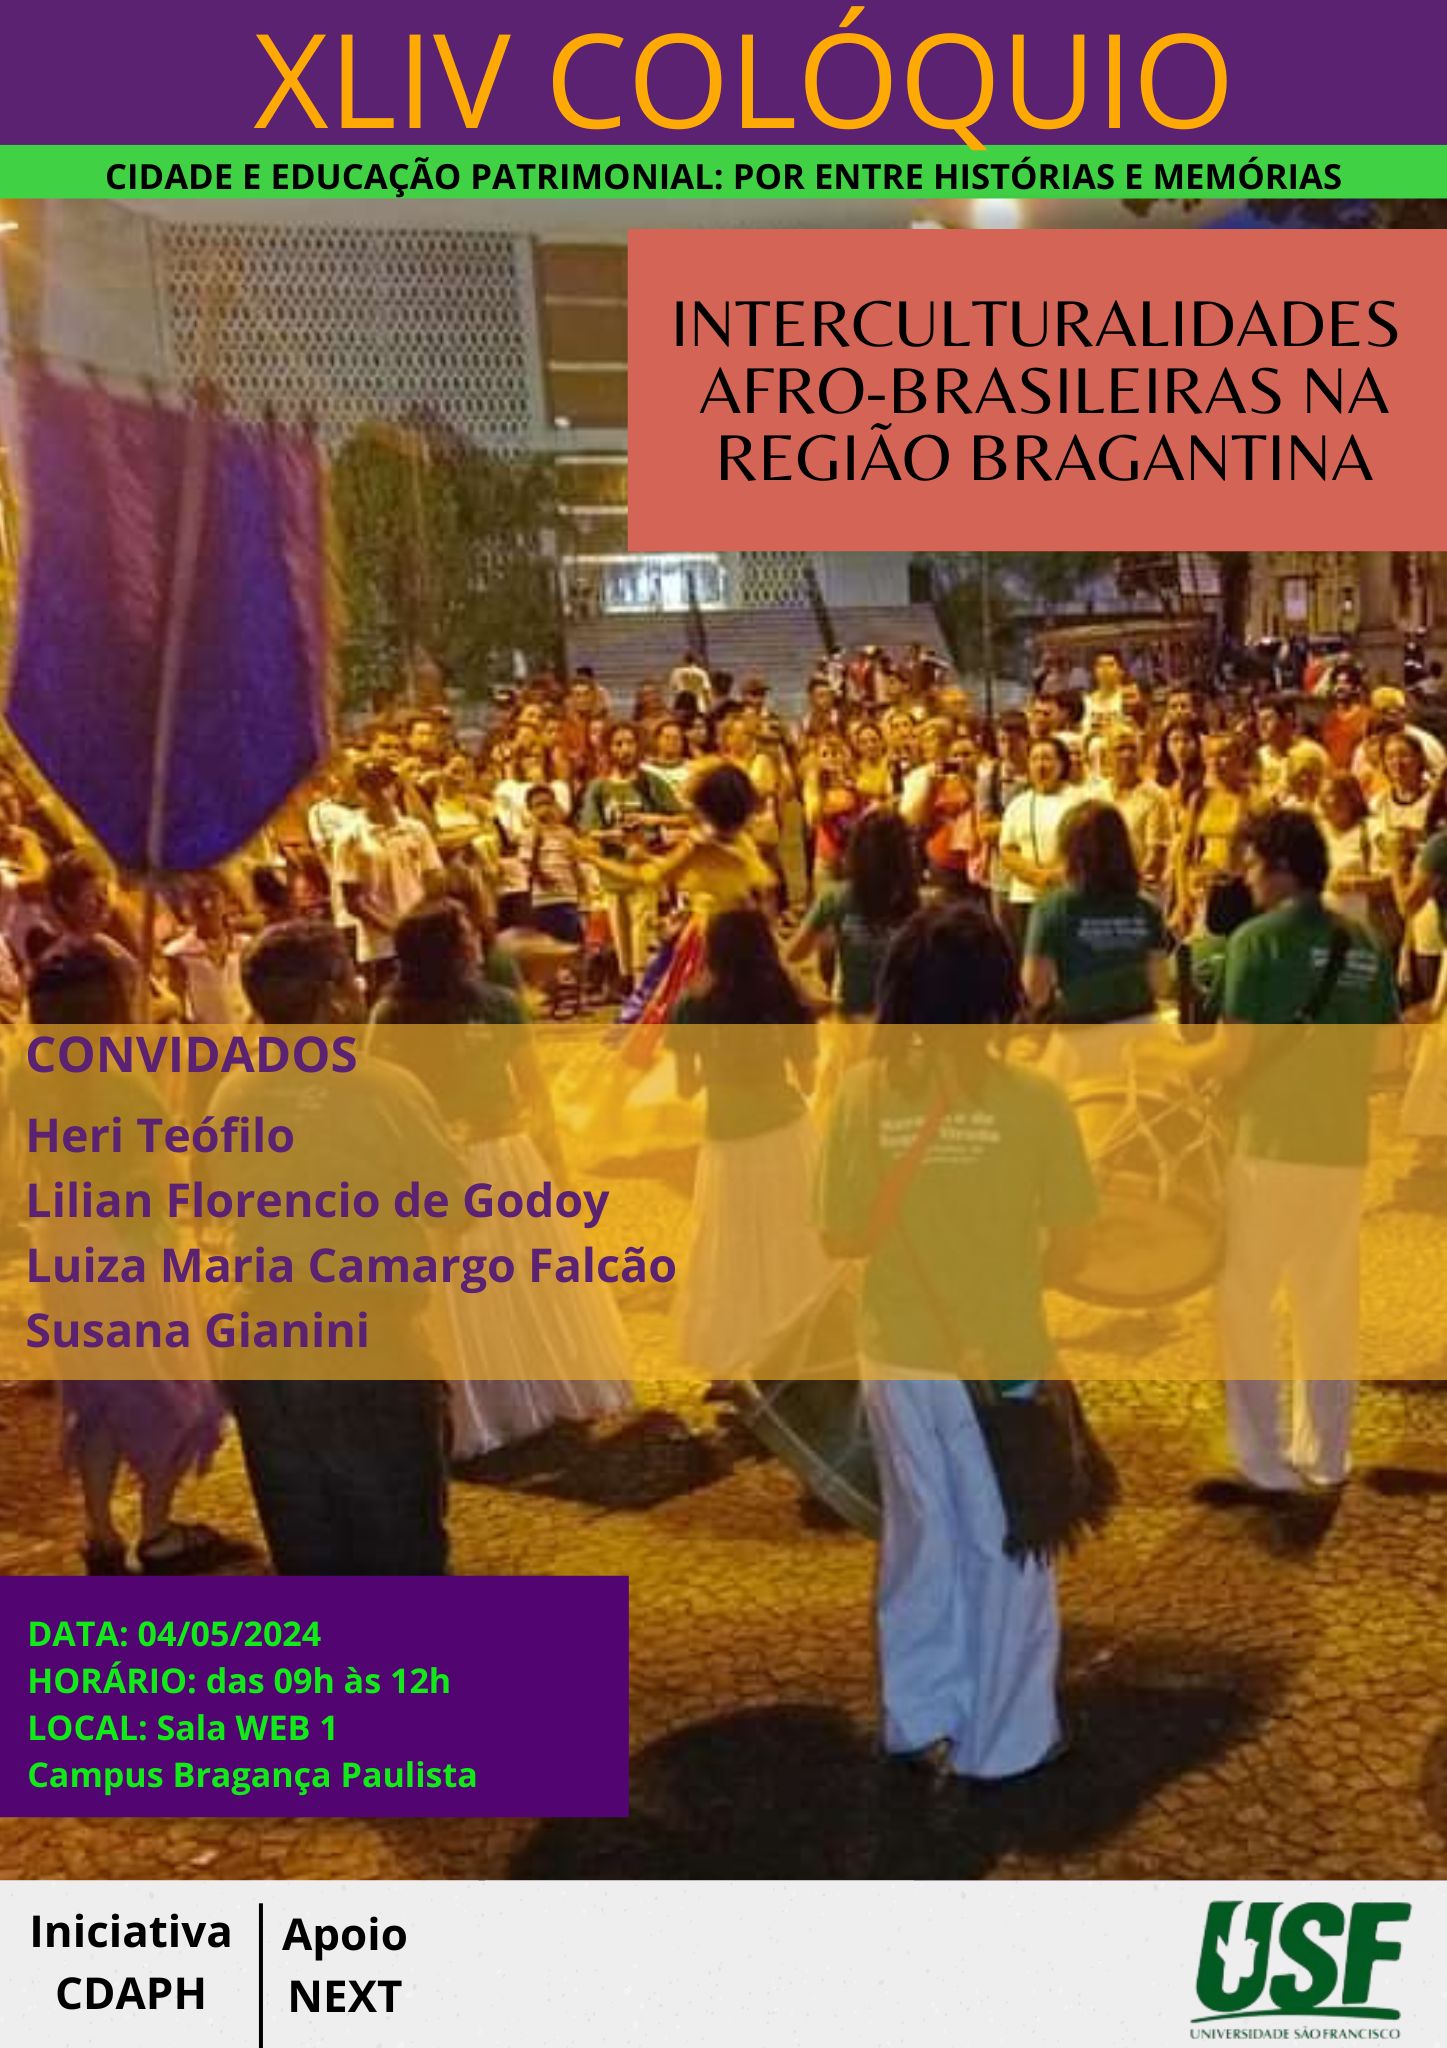 Interculturalidades afro-brasileiras na região bragantina